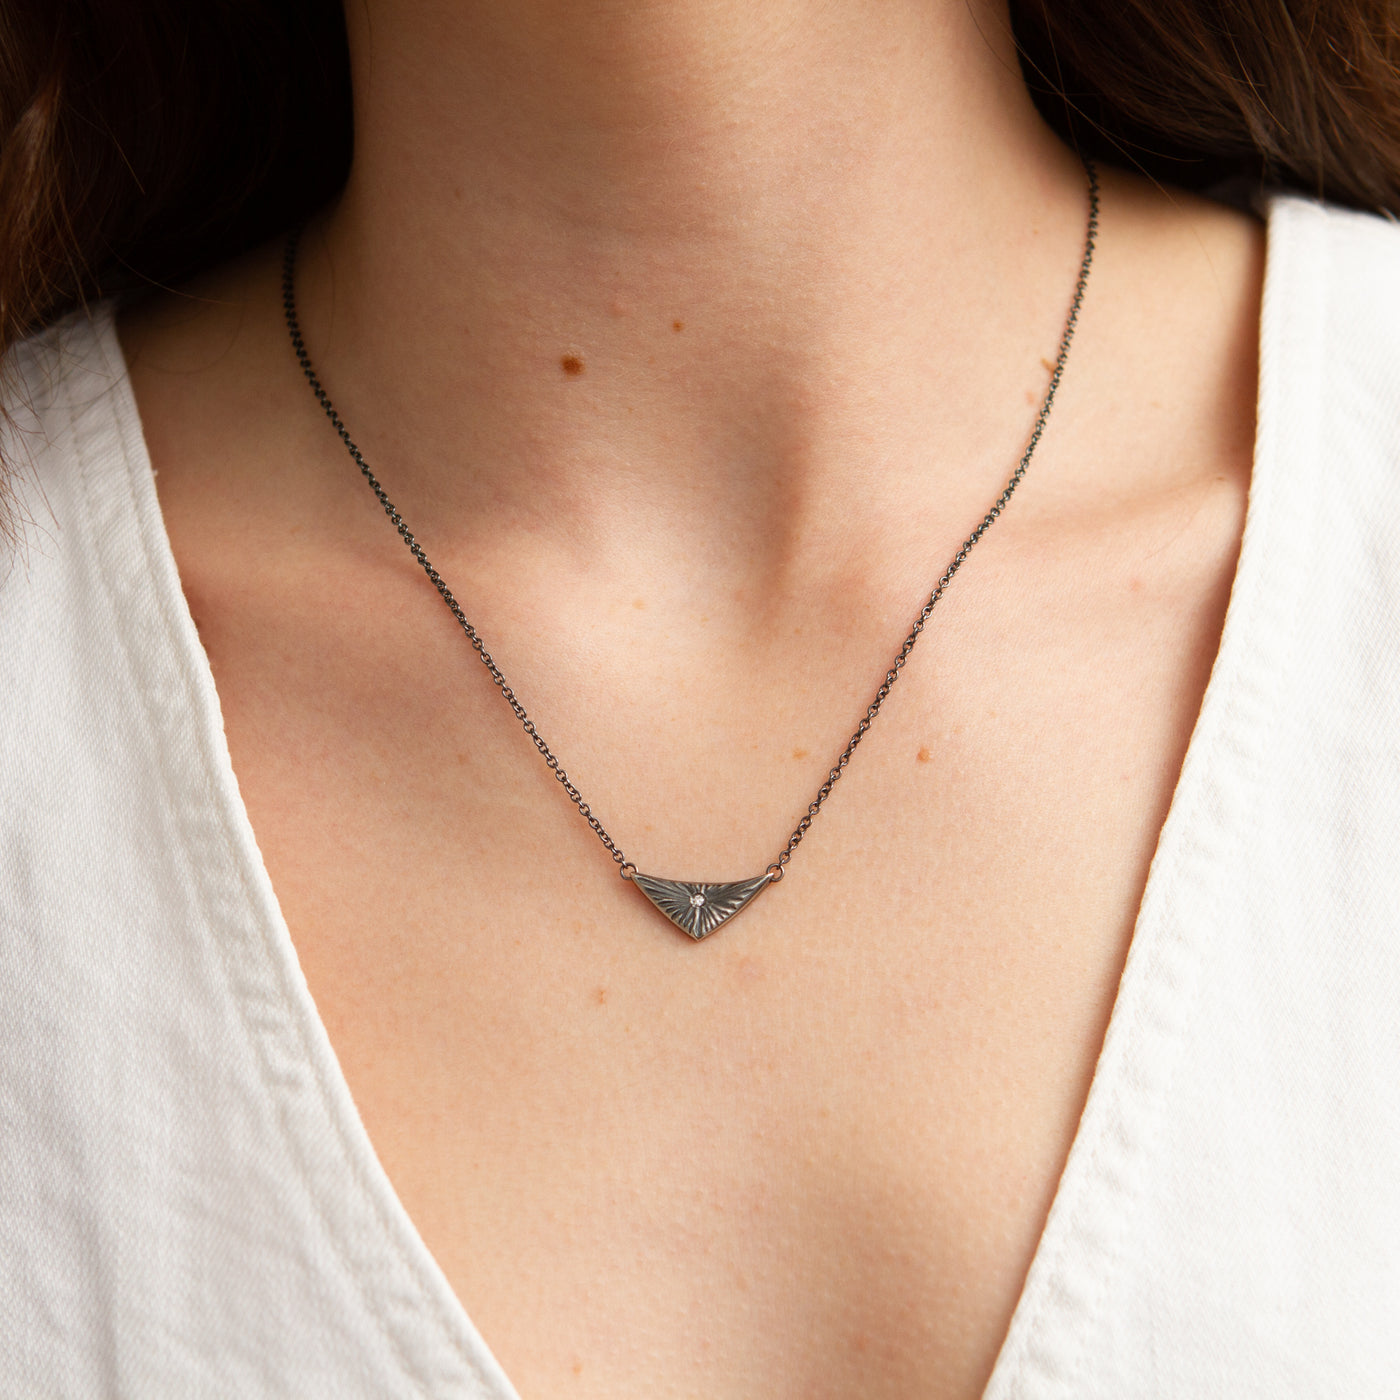 Oxidized Silver Flash Necklace modeled on a neck